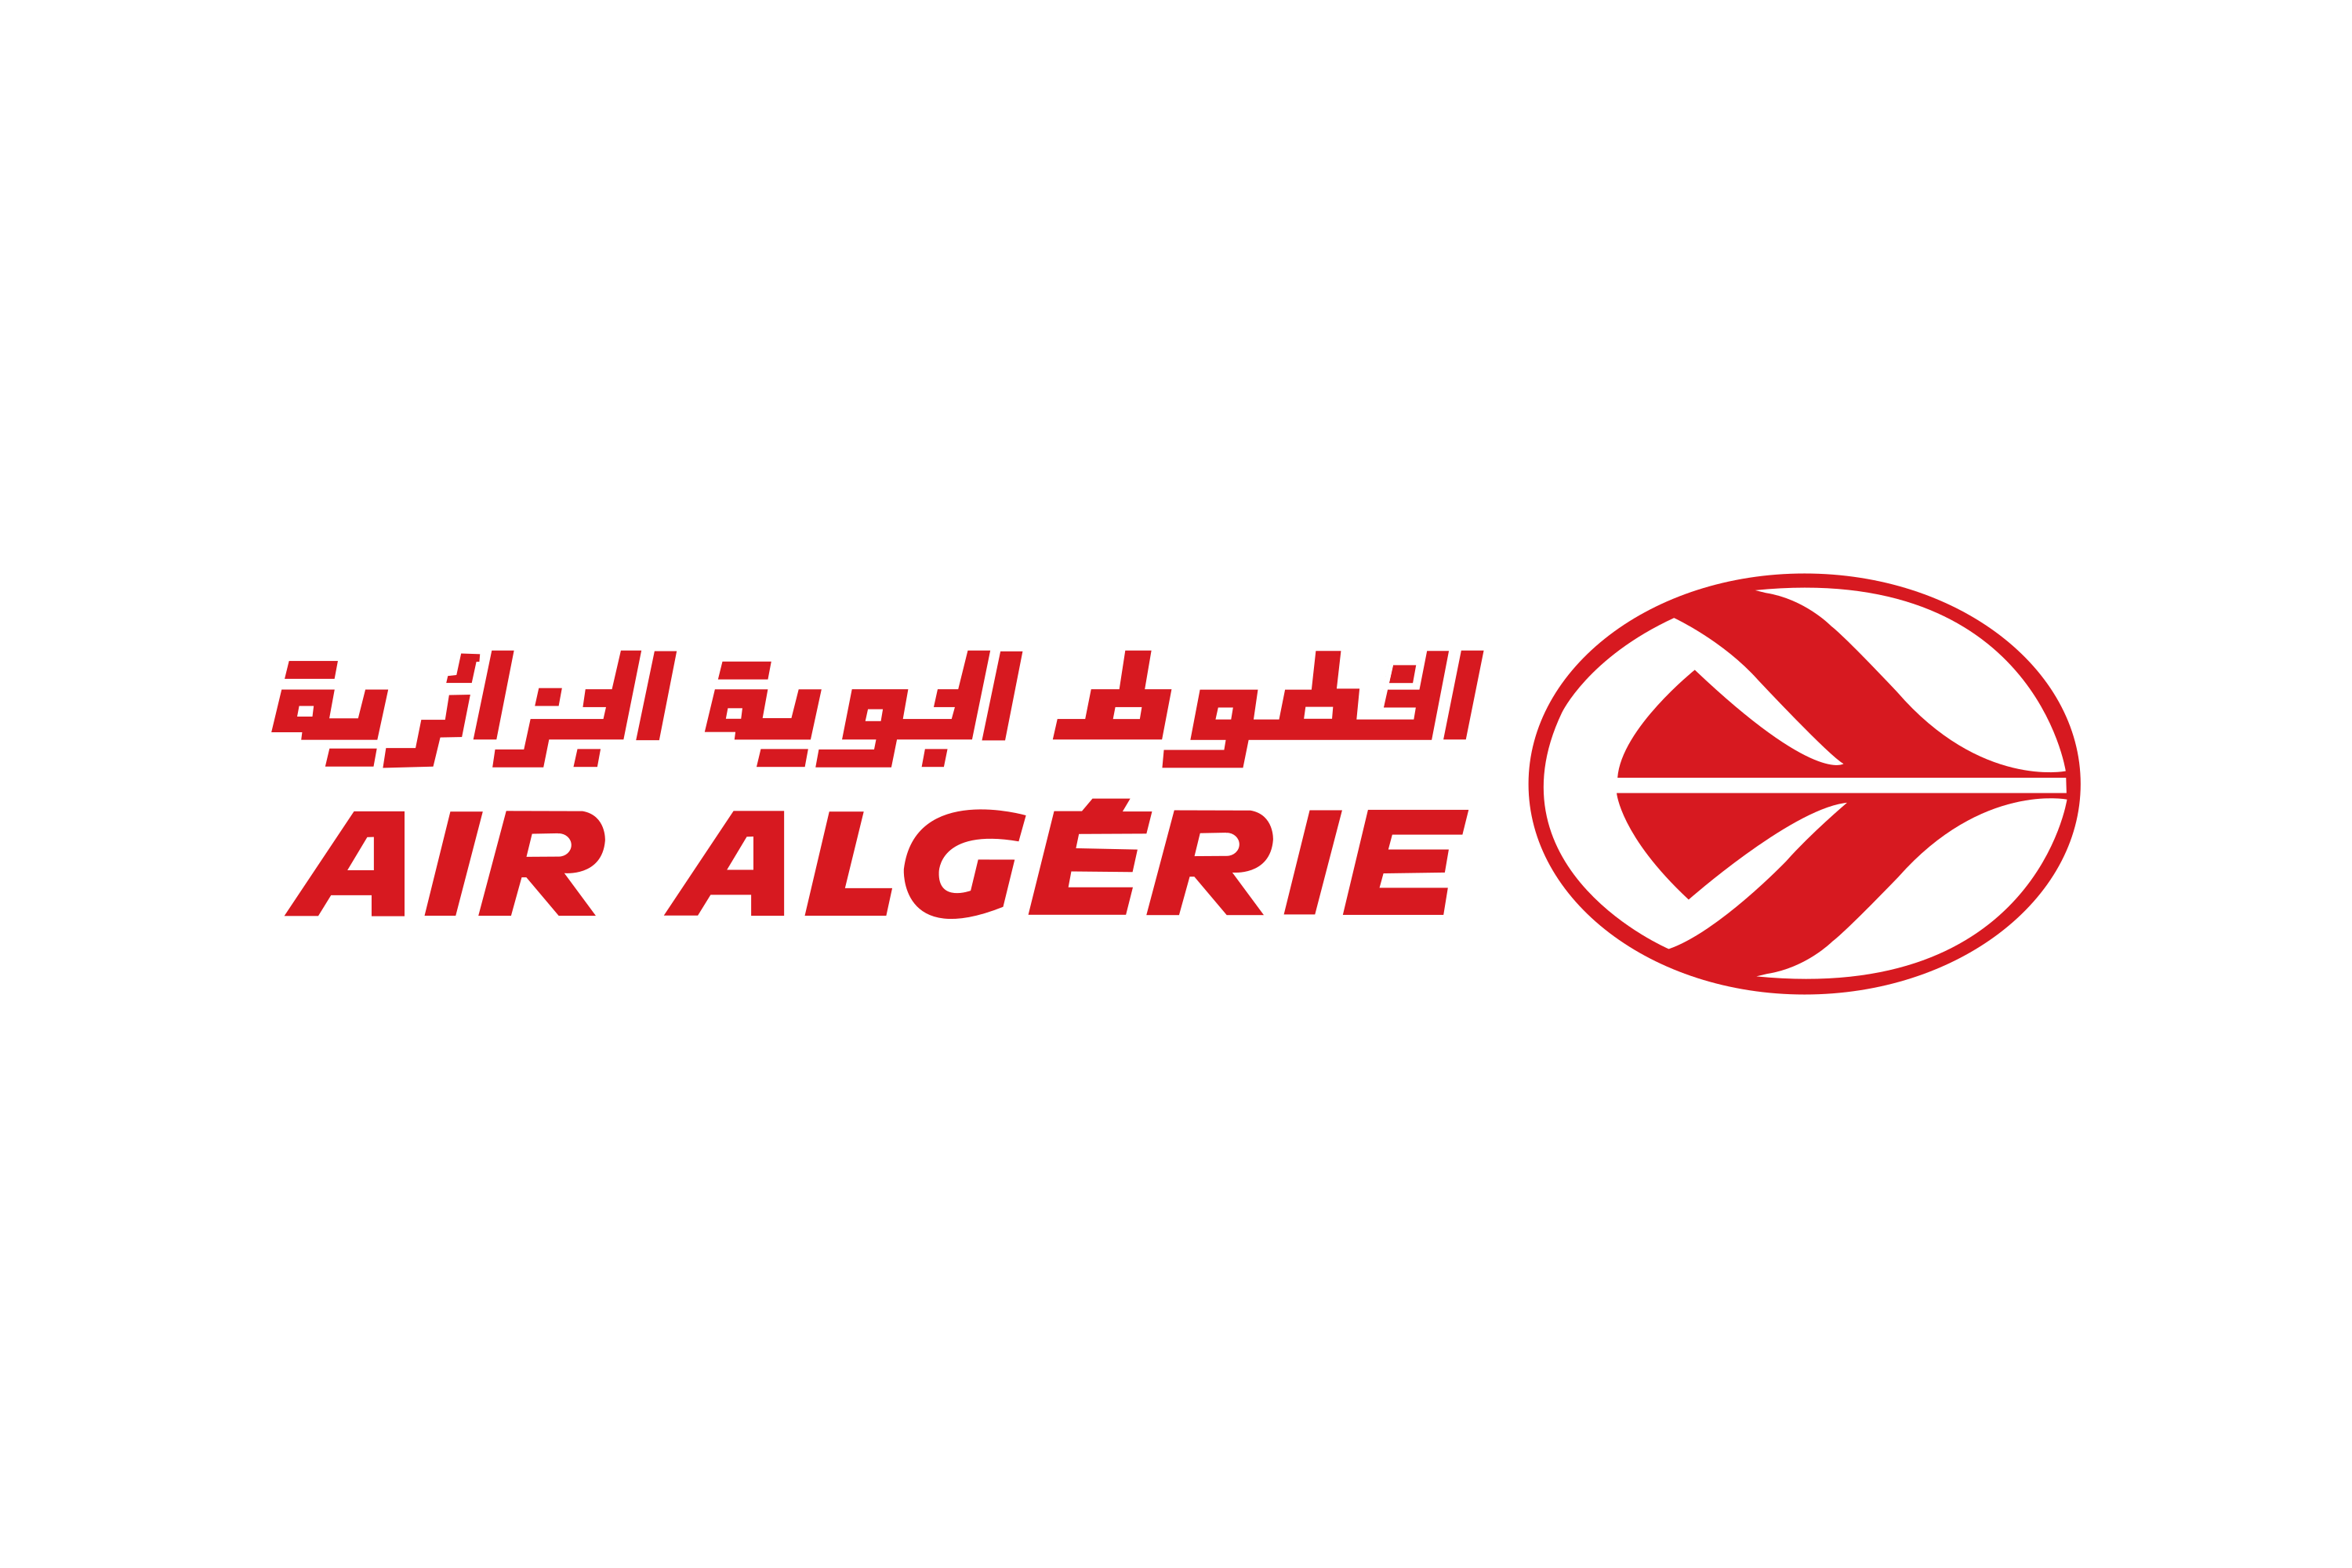 Download Air Algérie Logo in SVG Vector or PNG File Format - Logo.wine